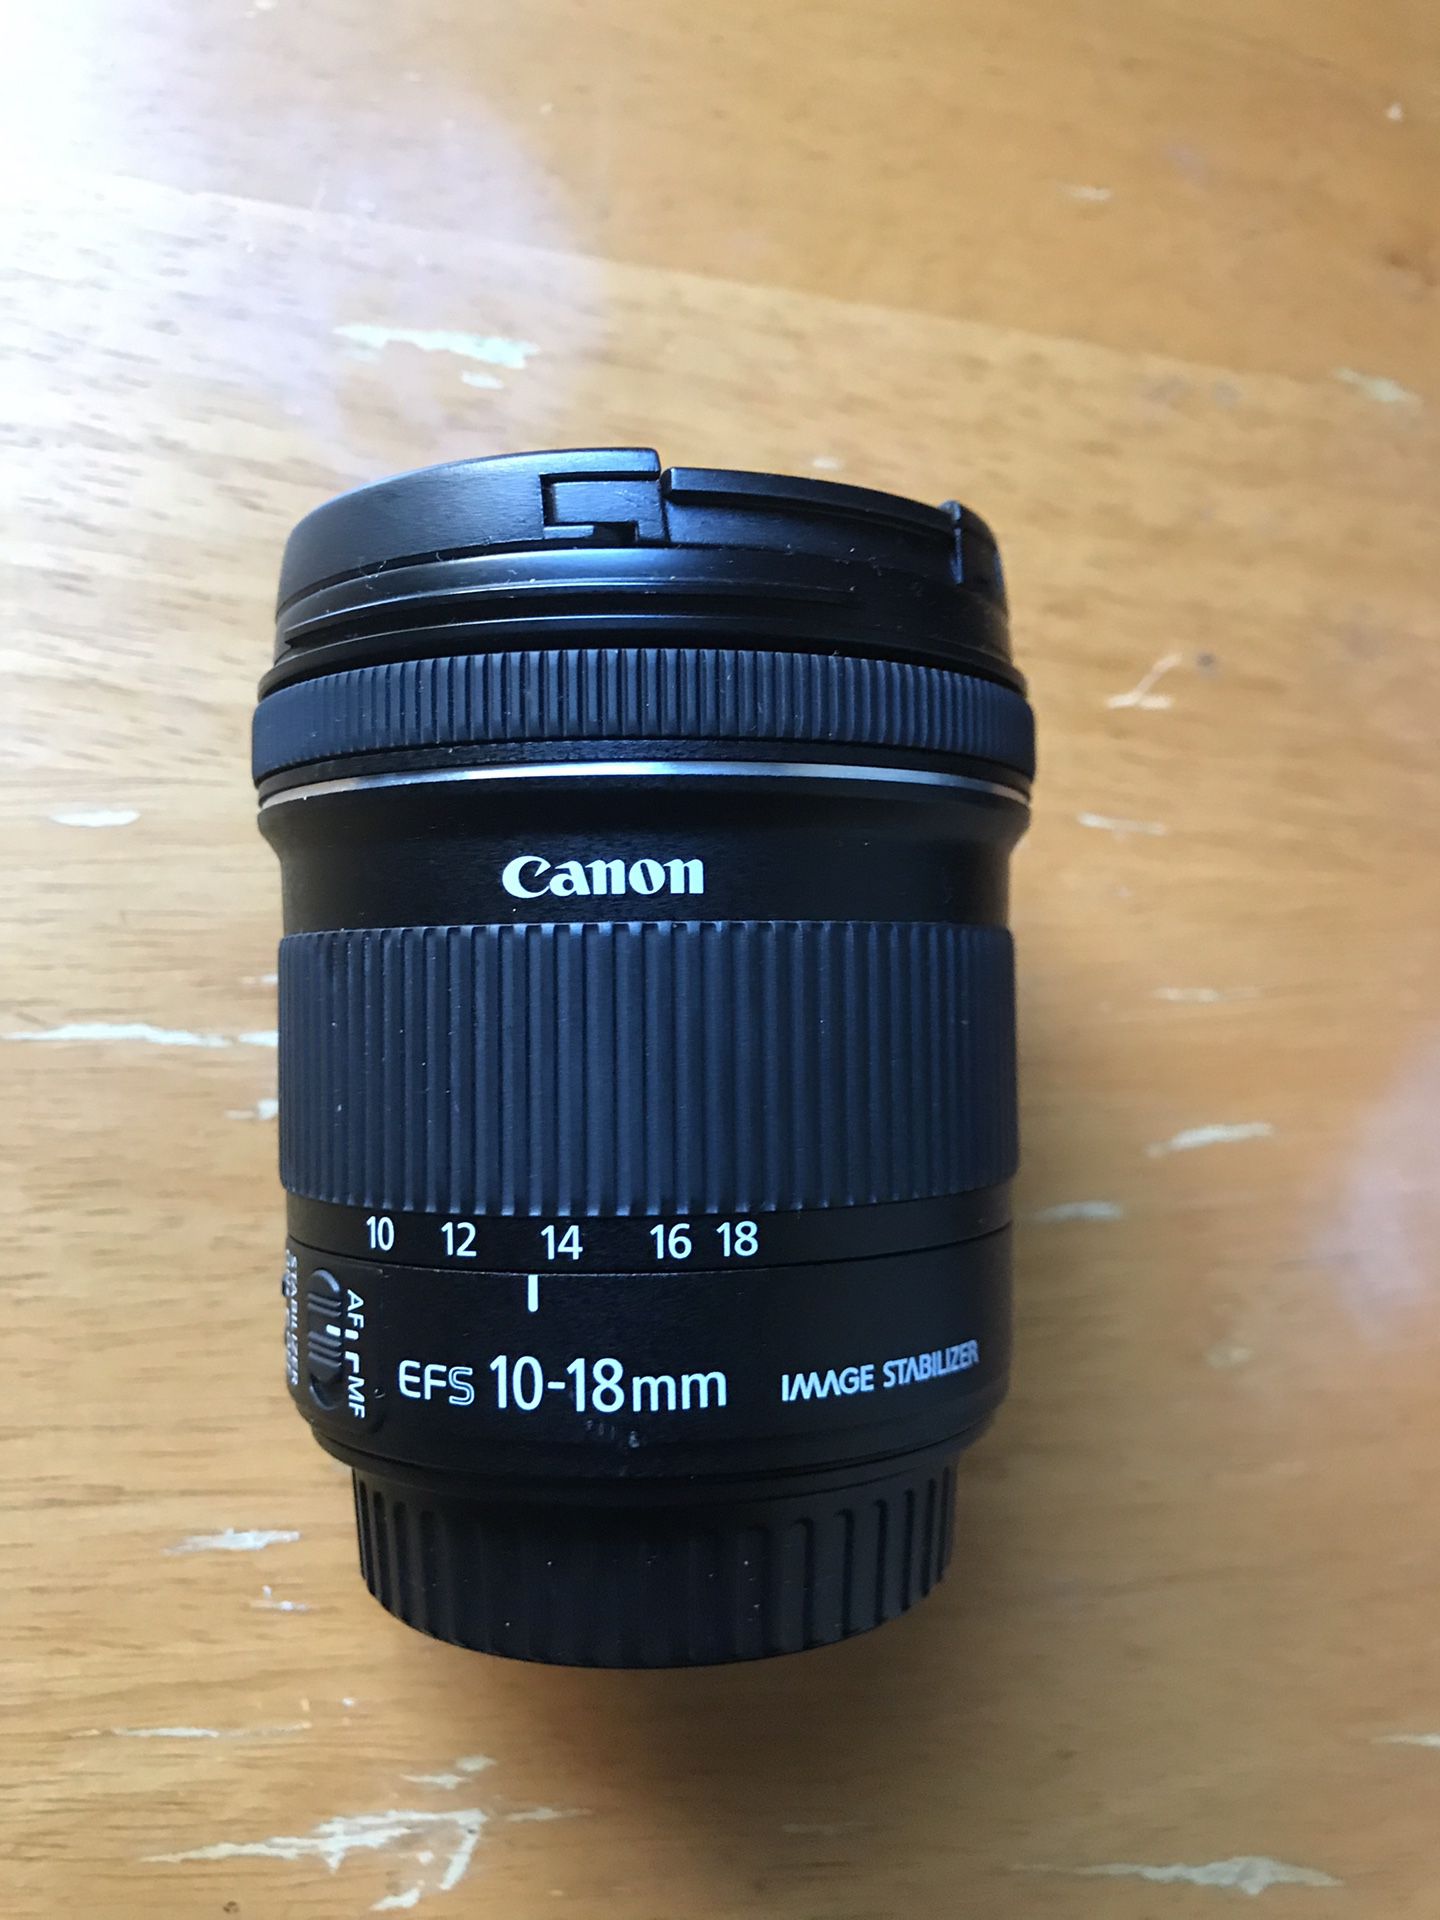 EF-S 10-18mm f/4.5-5.6 IS STM (Wide angle) lens for sale